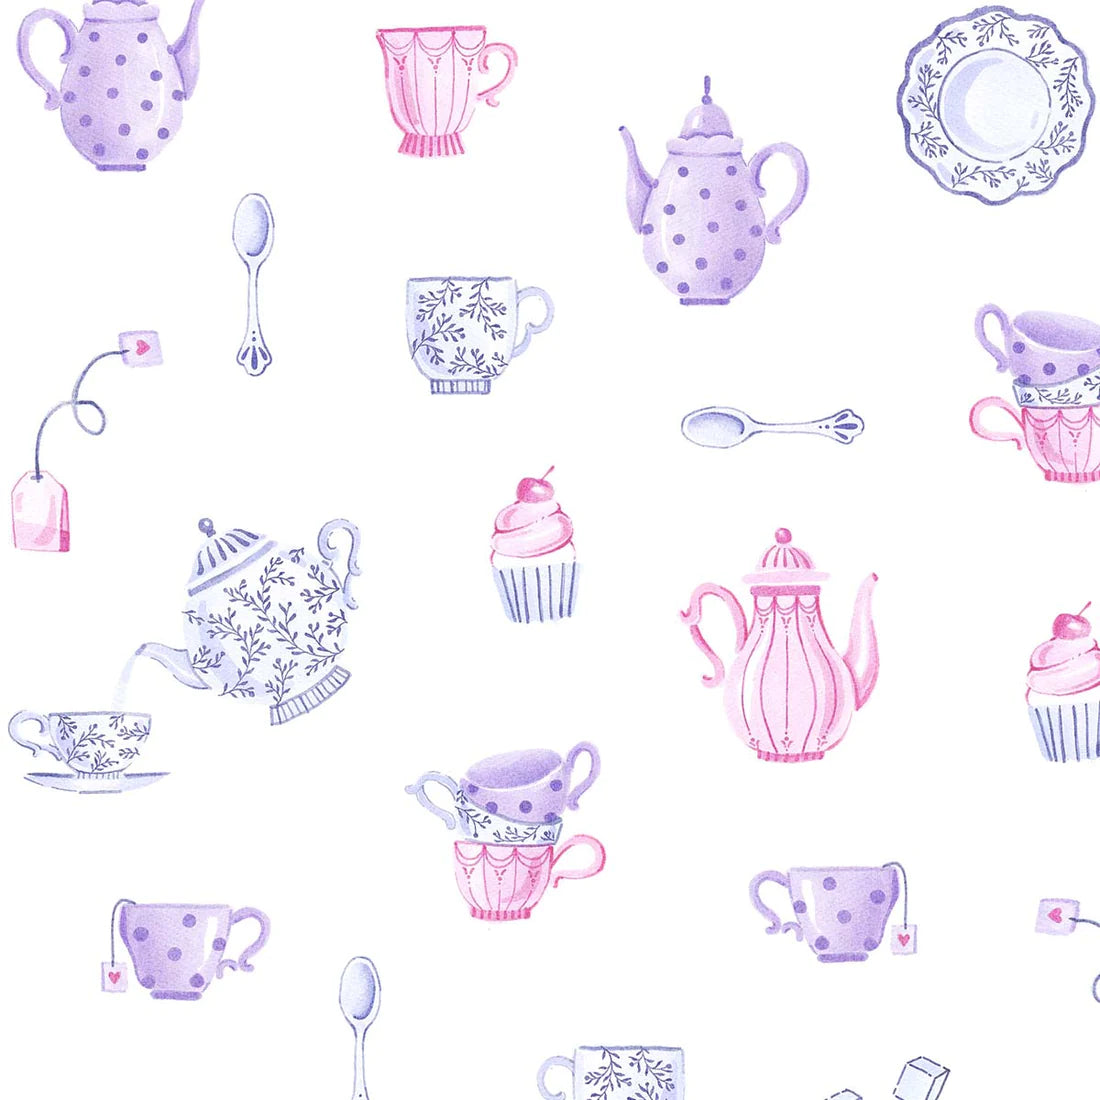 Lavender Bow - Tea Party Blanket